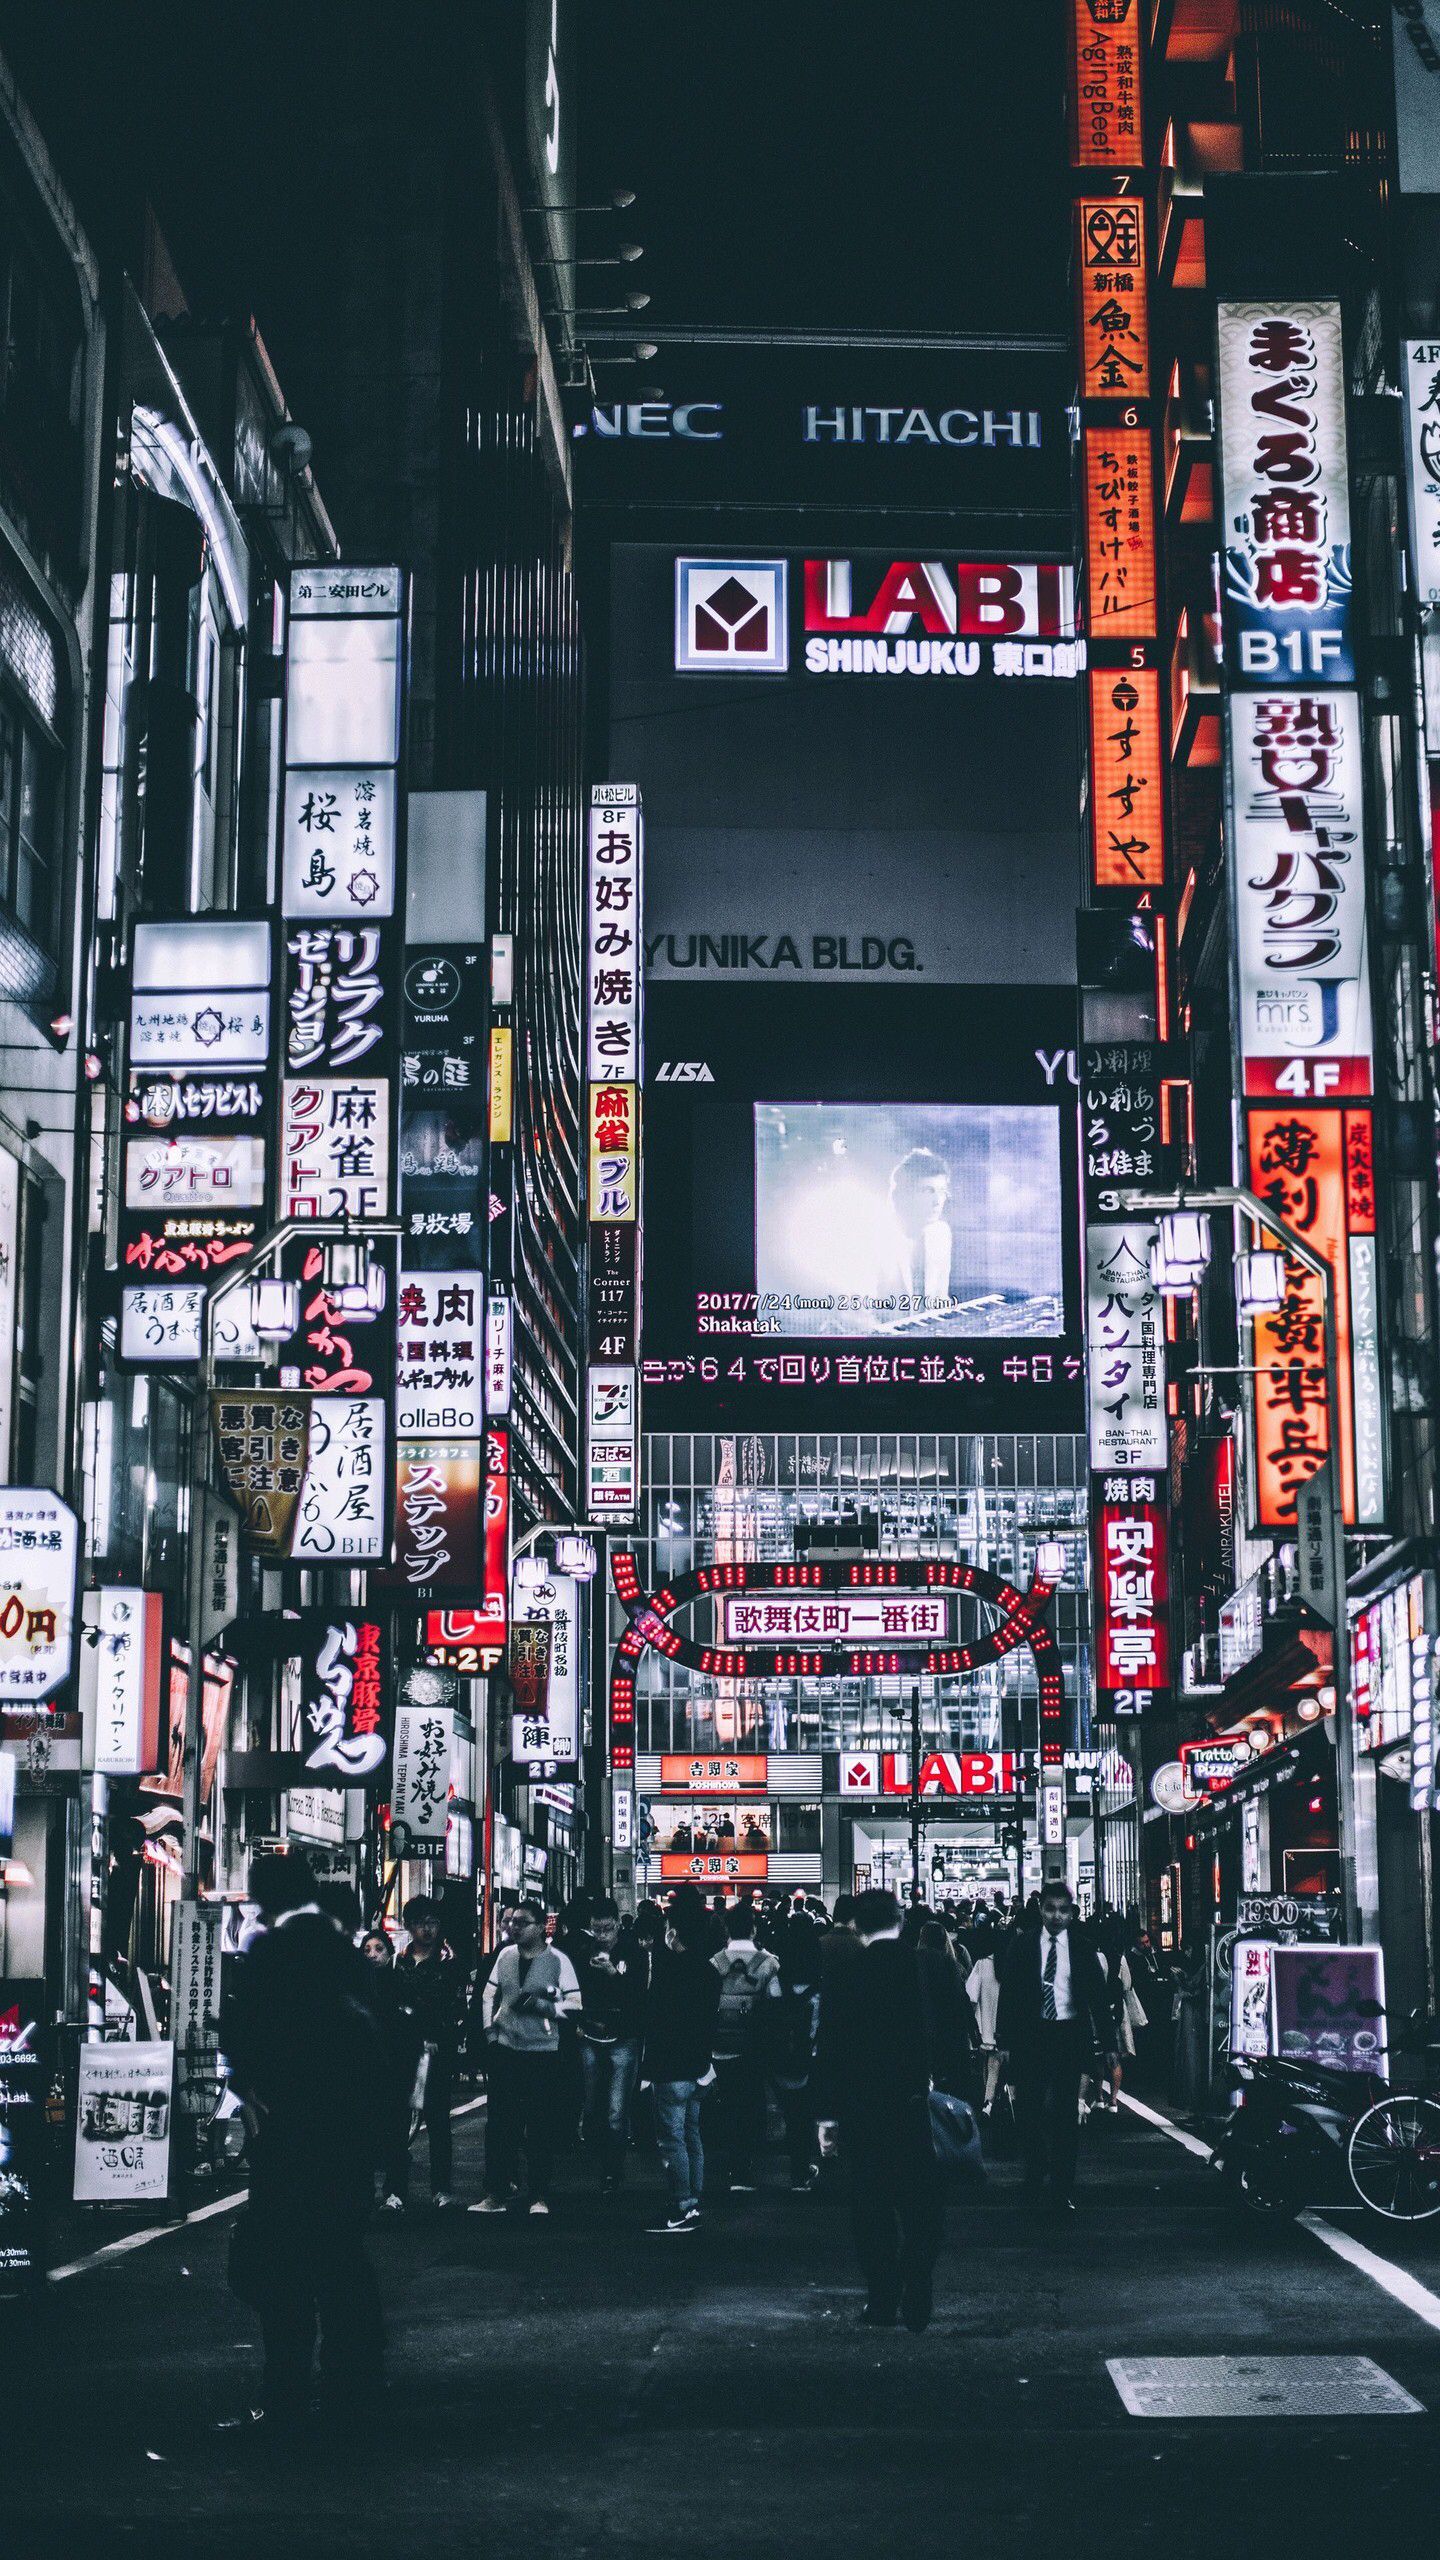 Photo “city night” by Amanda #OGQ. 視覚芸術, 街角フォト, 都市景観